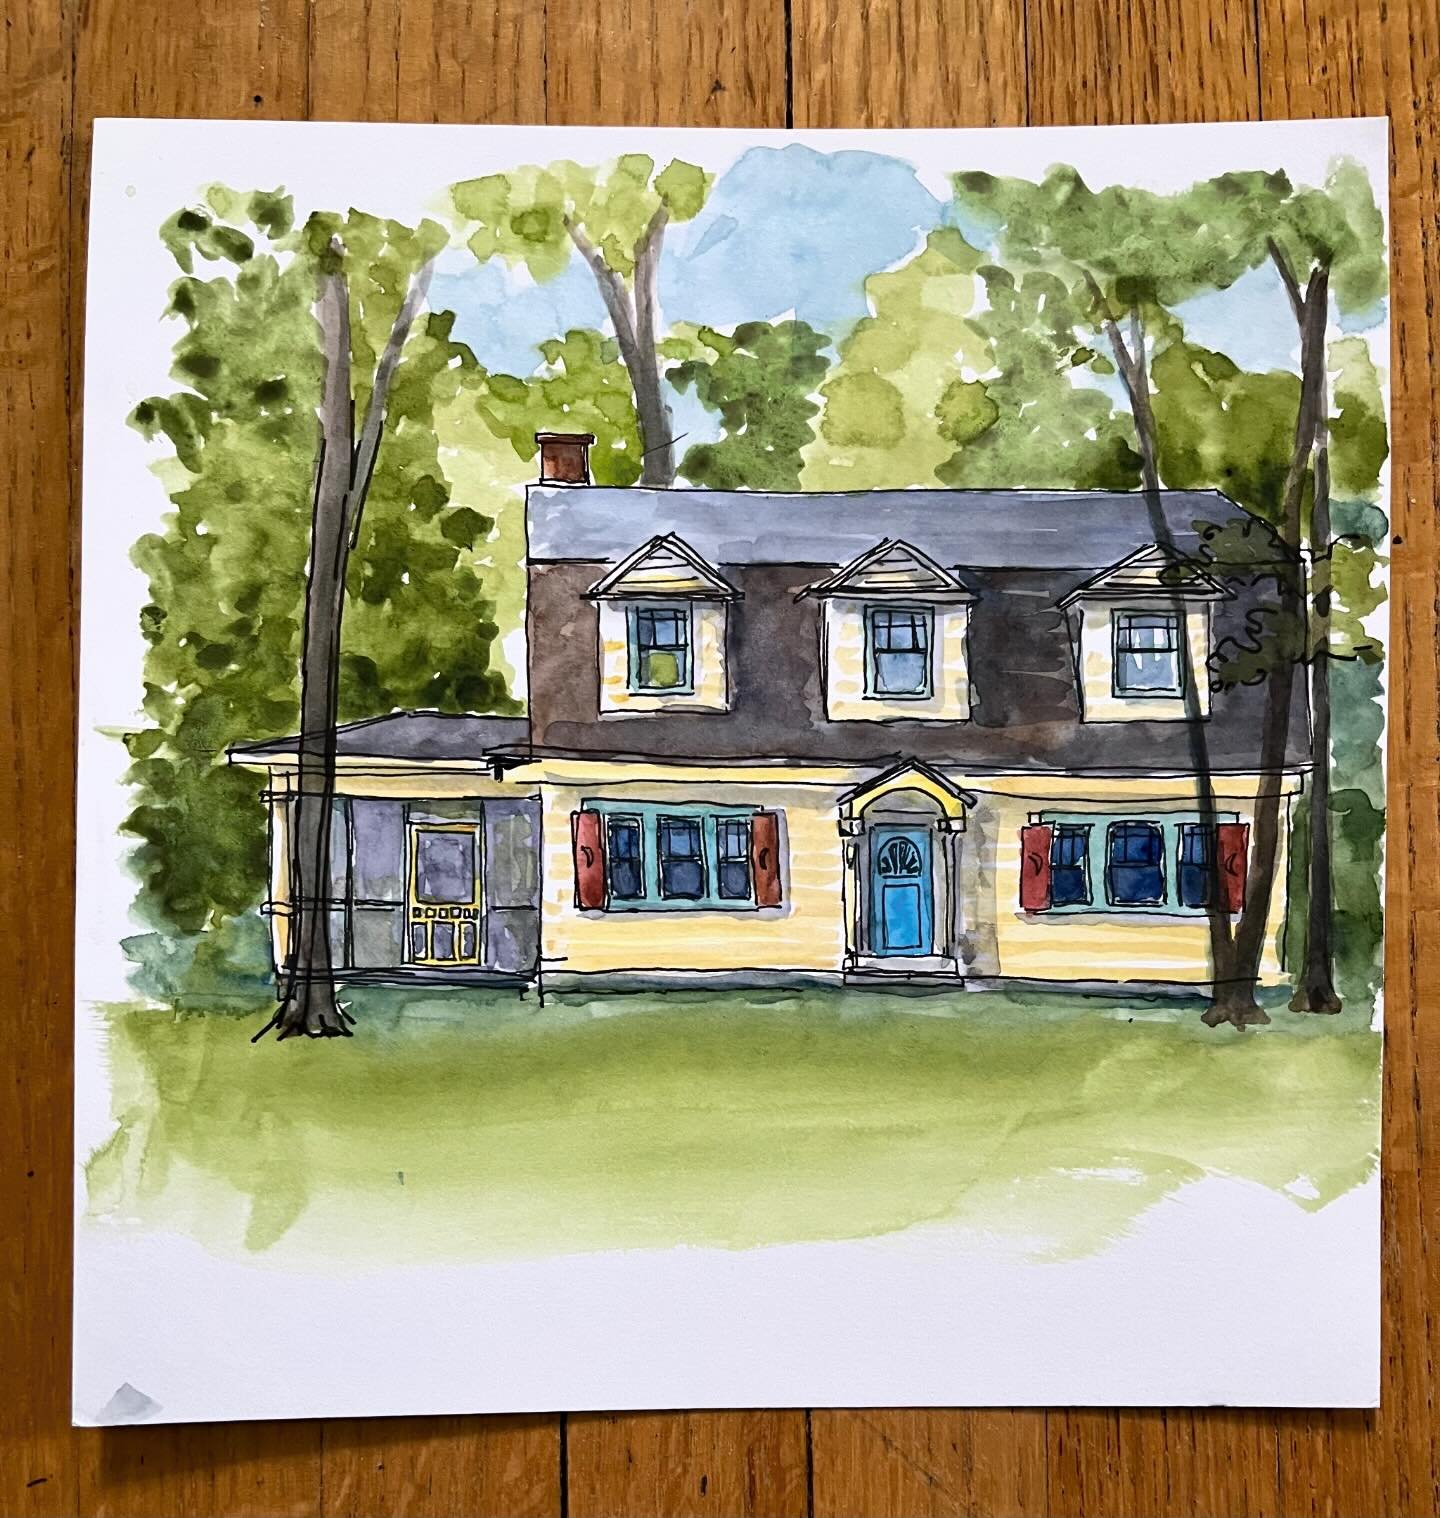 House drawn after exploring the Messick-Buntyn neighborhood last week. #sketchbook #sketchingnowbuildings #inkandwatercolour #inkandwatercolor #inkandwash #houseportrait